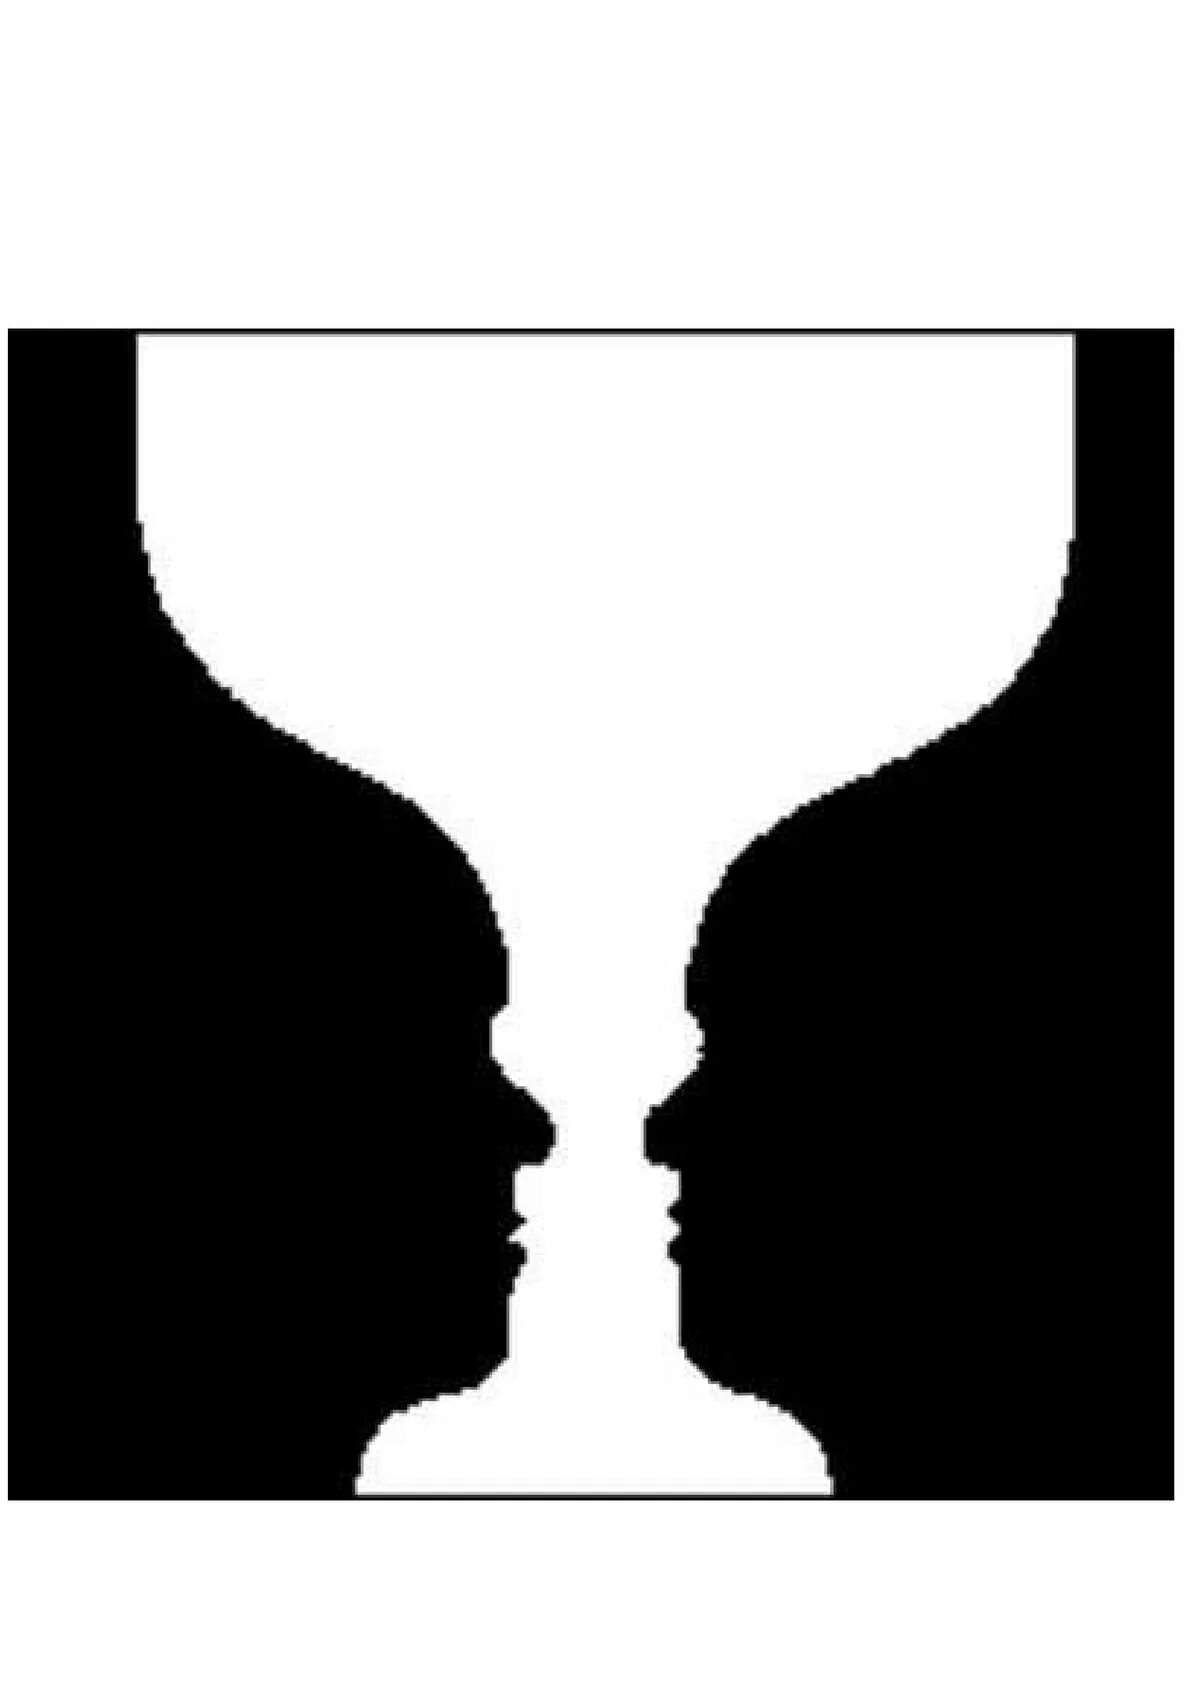 Ваза или два лица. Иллюзия ваза и лица. Иллюзии фигуры и фона. Тест ваза или лицо.